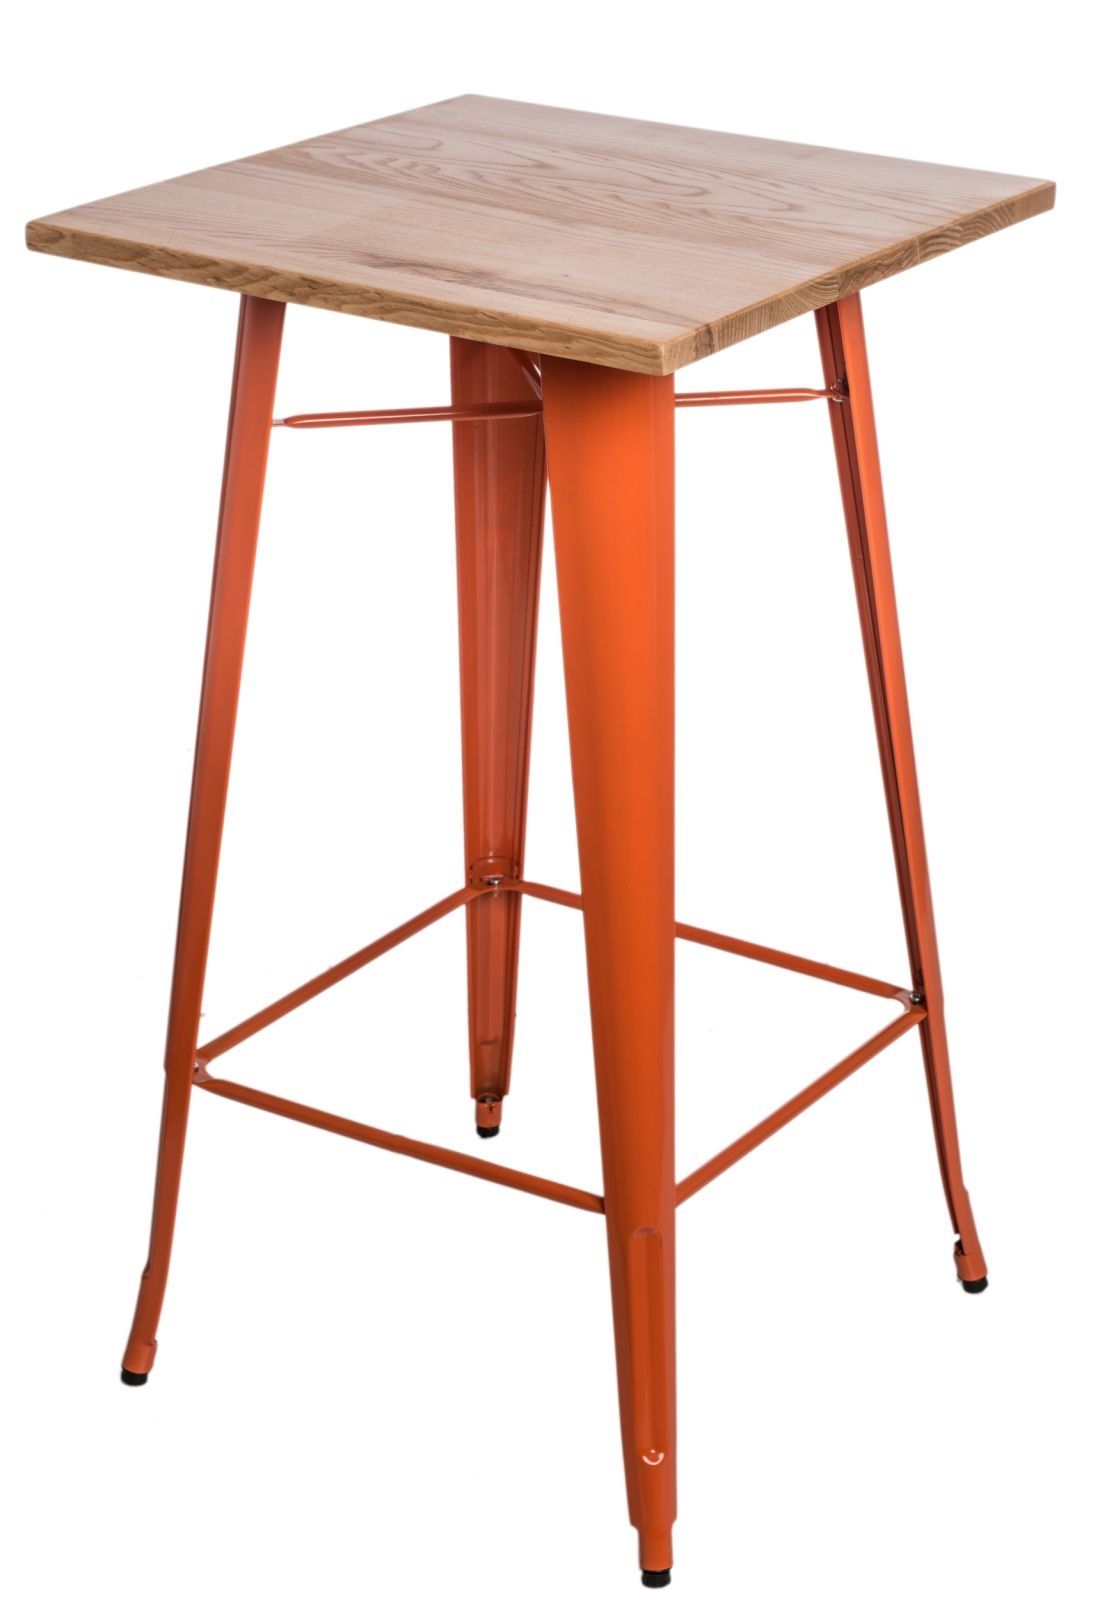  Stôl barový Paris Wood oranž jaseň - mobler.sk